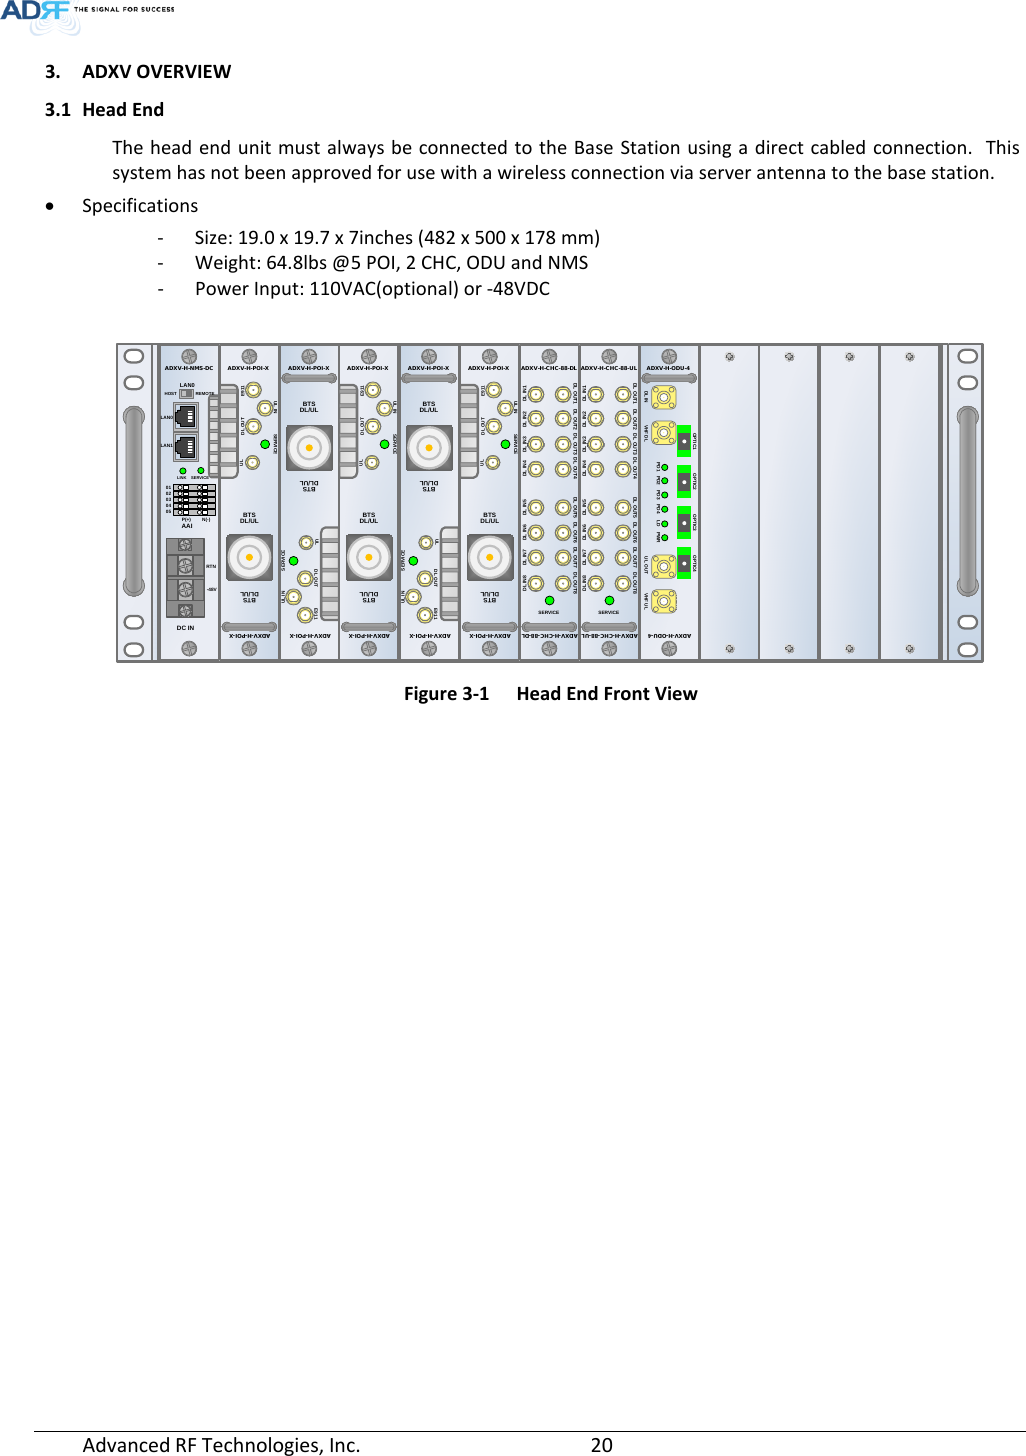 Page 20 of ADRF KOREA ADXV DAS(Distributed Antenna System) User Manual ADXV DAS